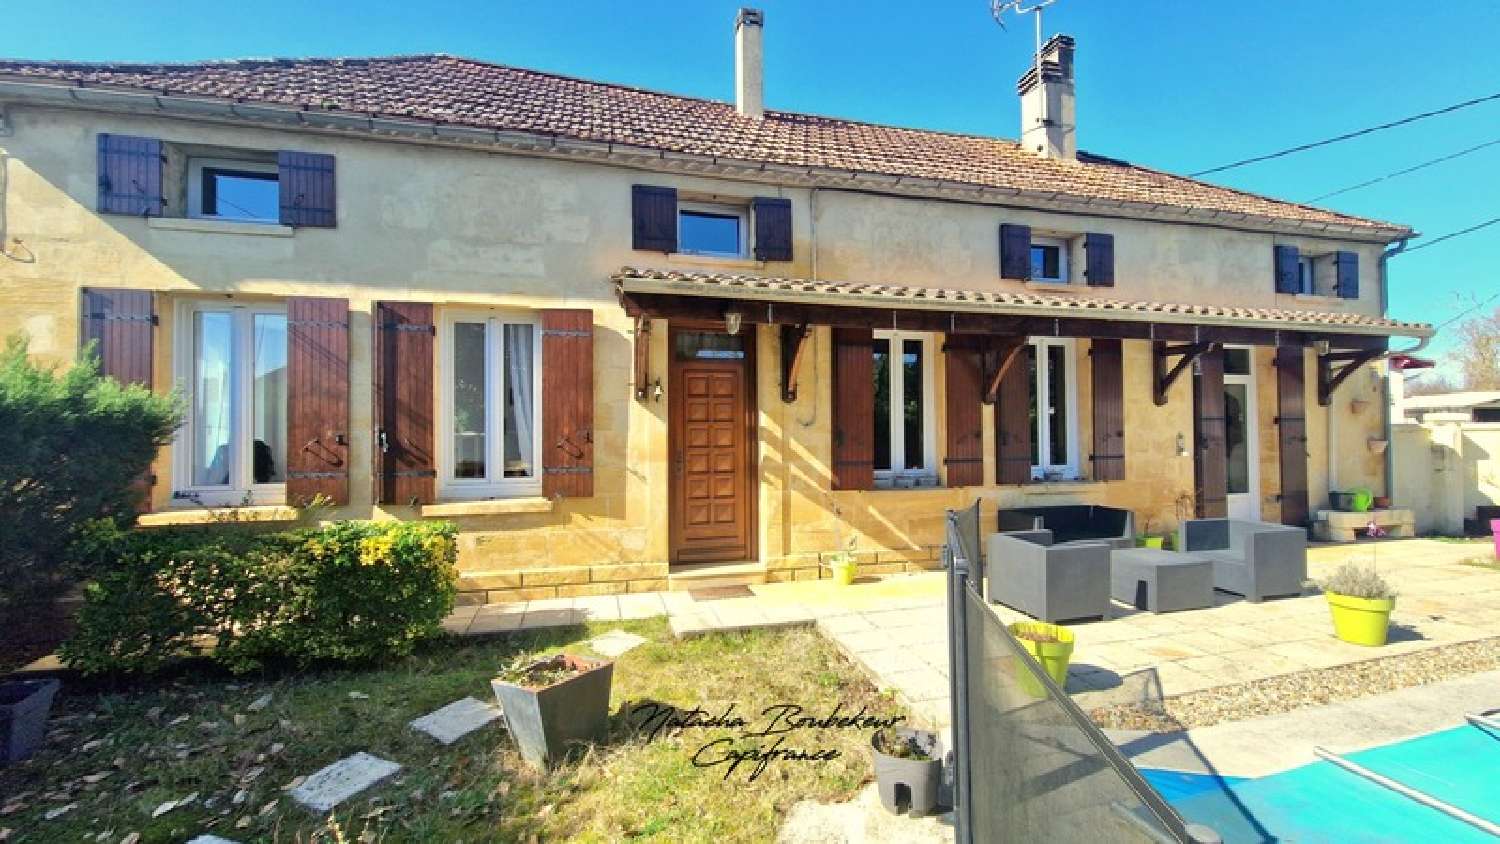  à vendre maison Bergerac Dordogne 1